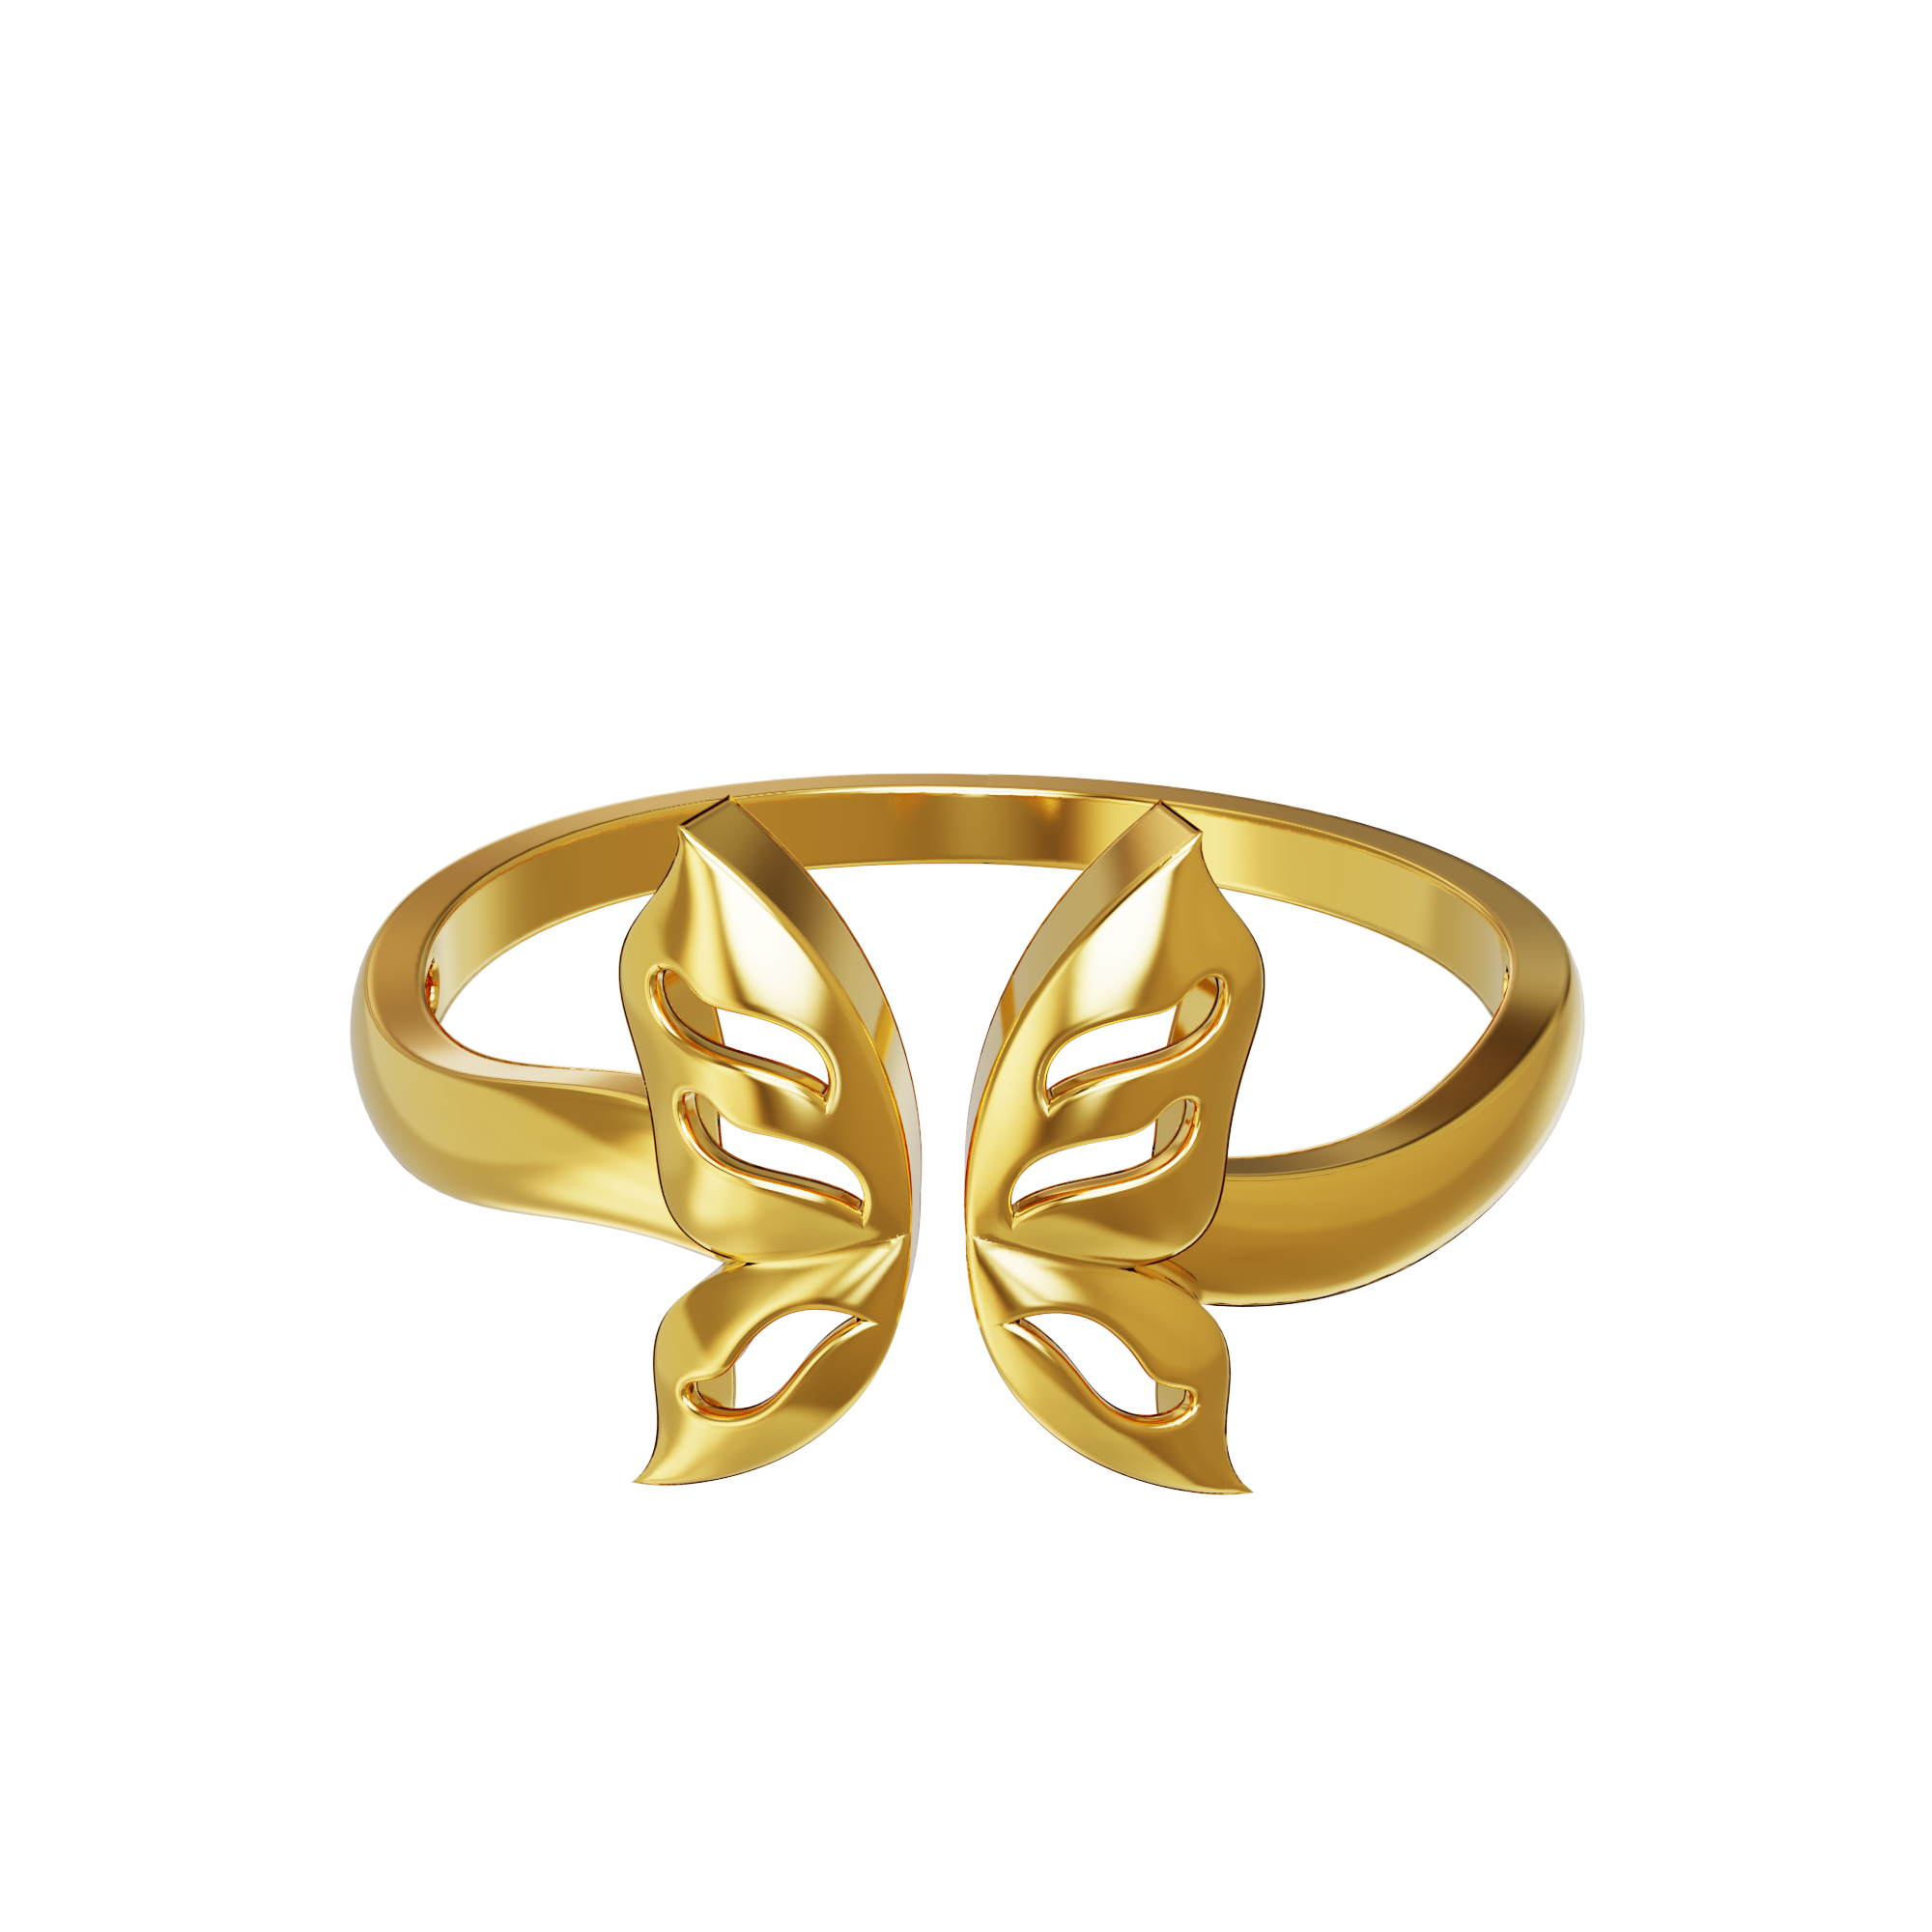 Details more than 75 butterfly ring design gold super hot - vova.edu.vn